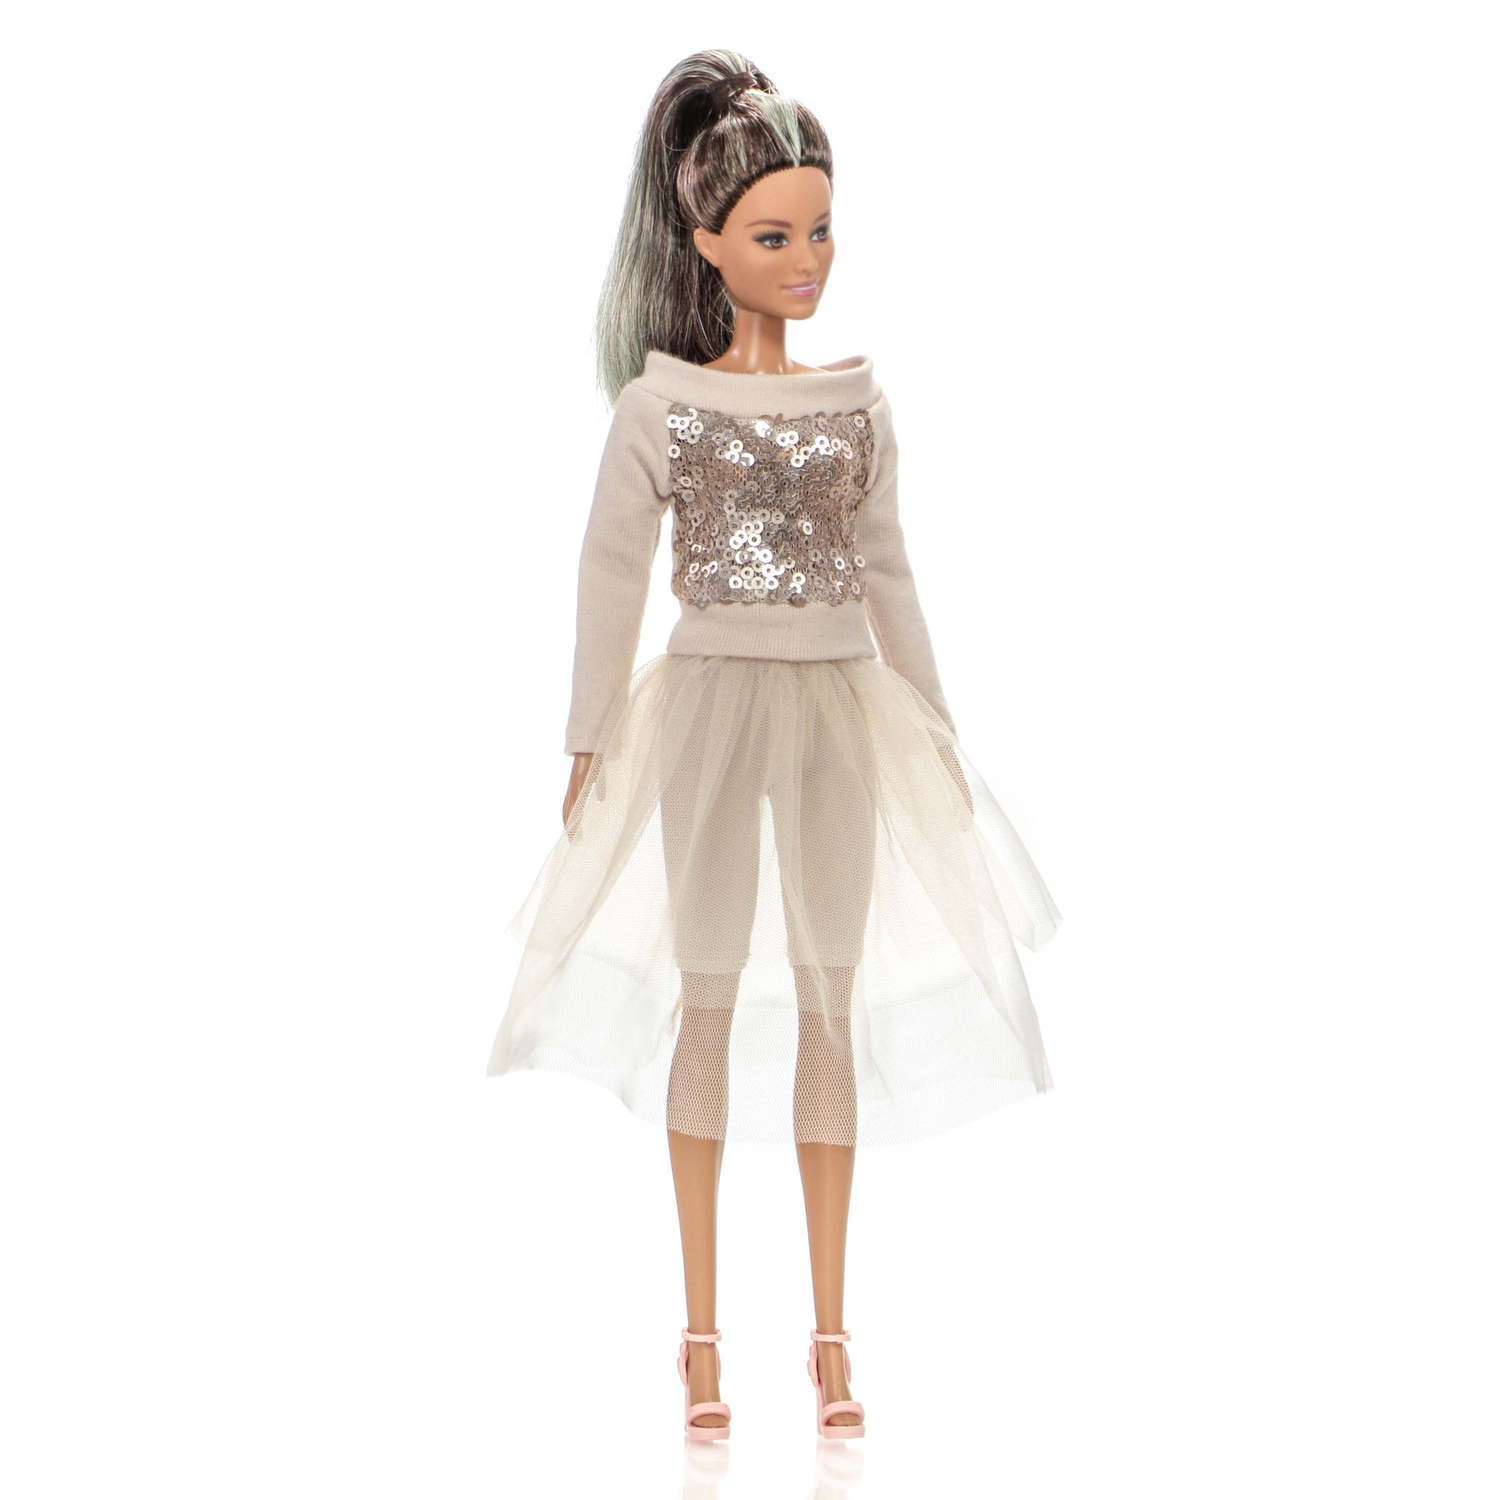 Одежда для кукол VIANA типа Барби 11.147.4 комплект бежевый 11.147.4 - фото 2